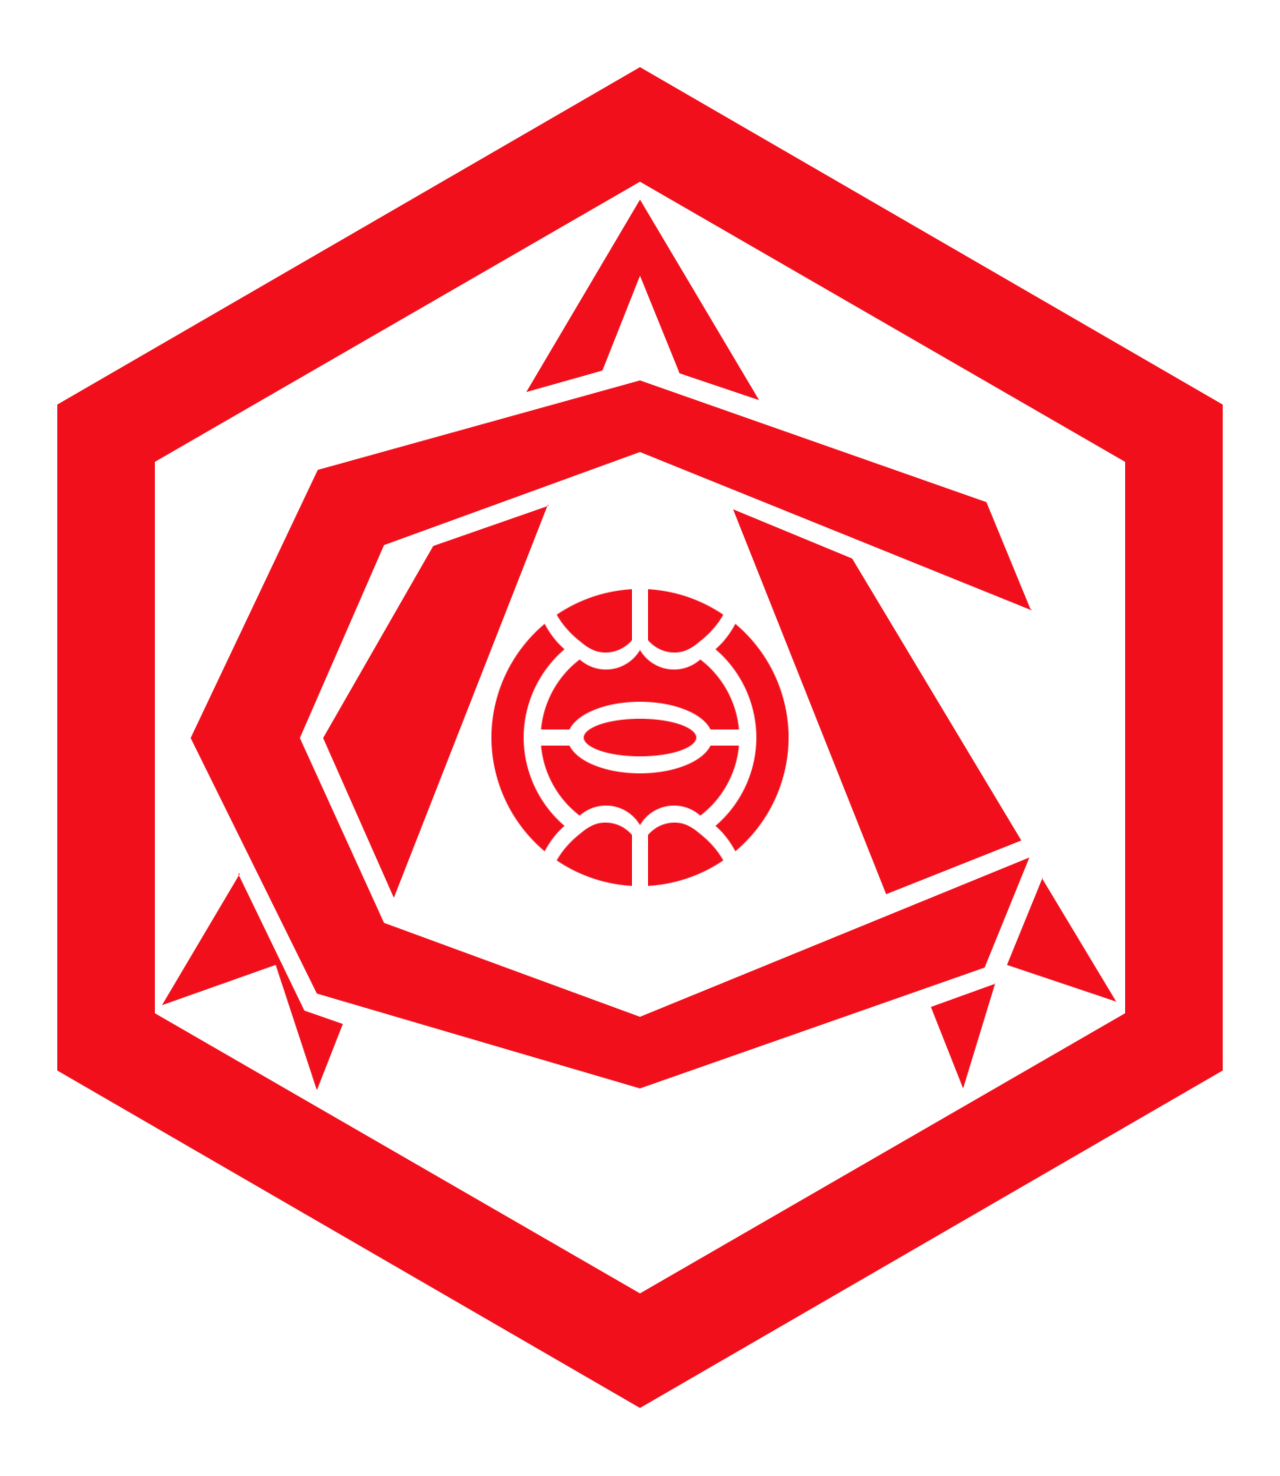 arsenal logo, arsenal vector download new vitruvian #32070